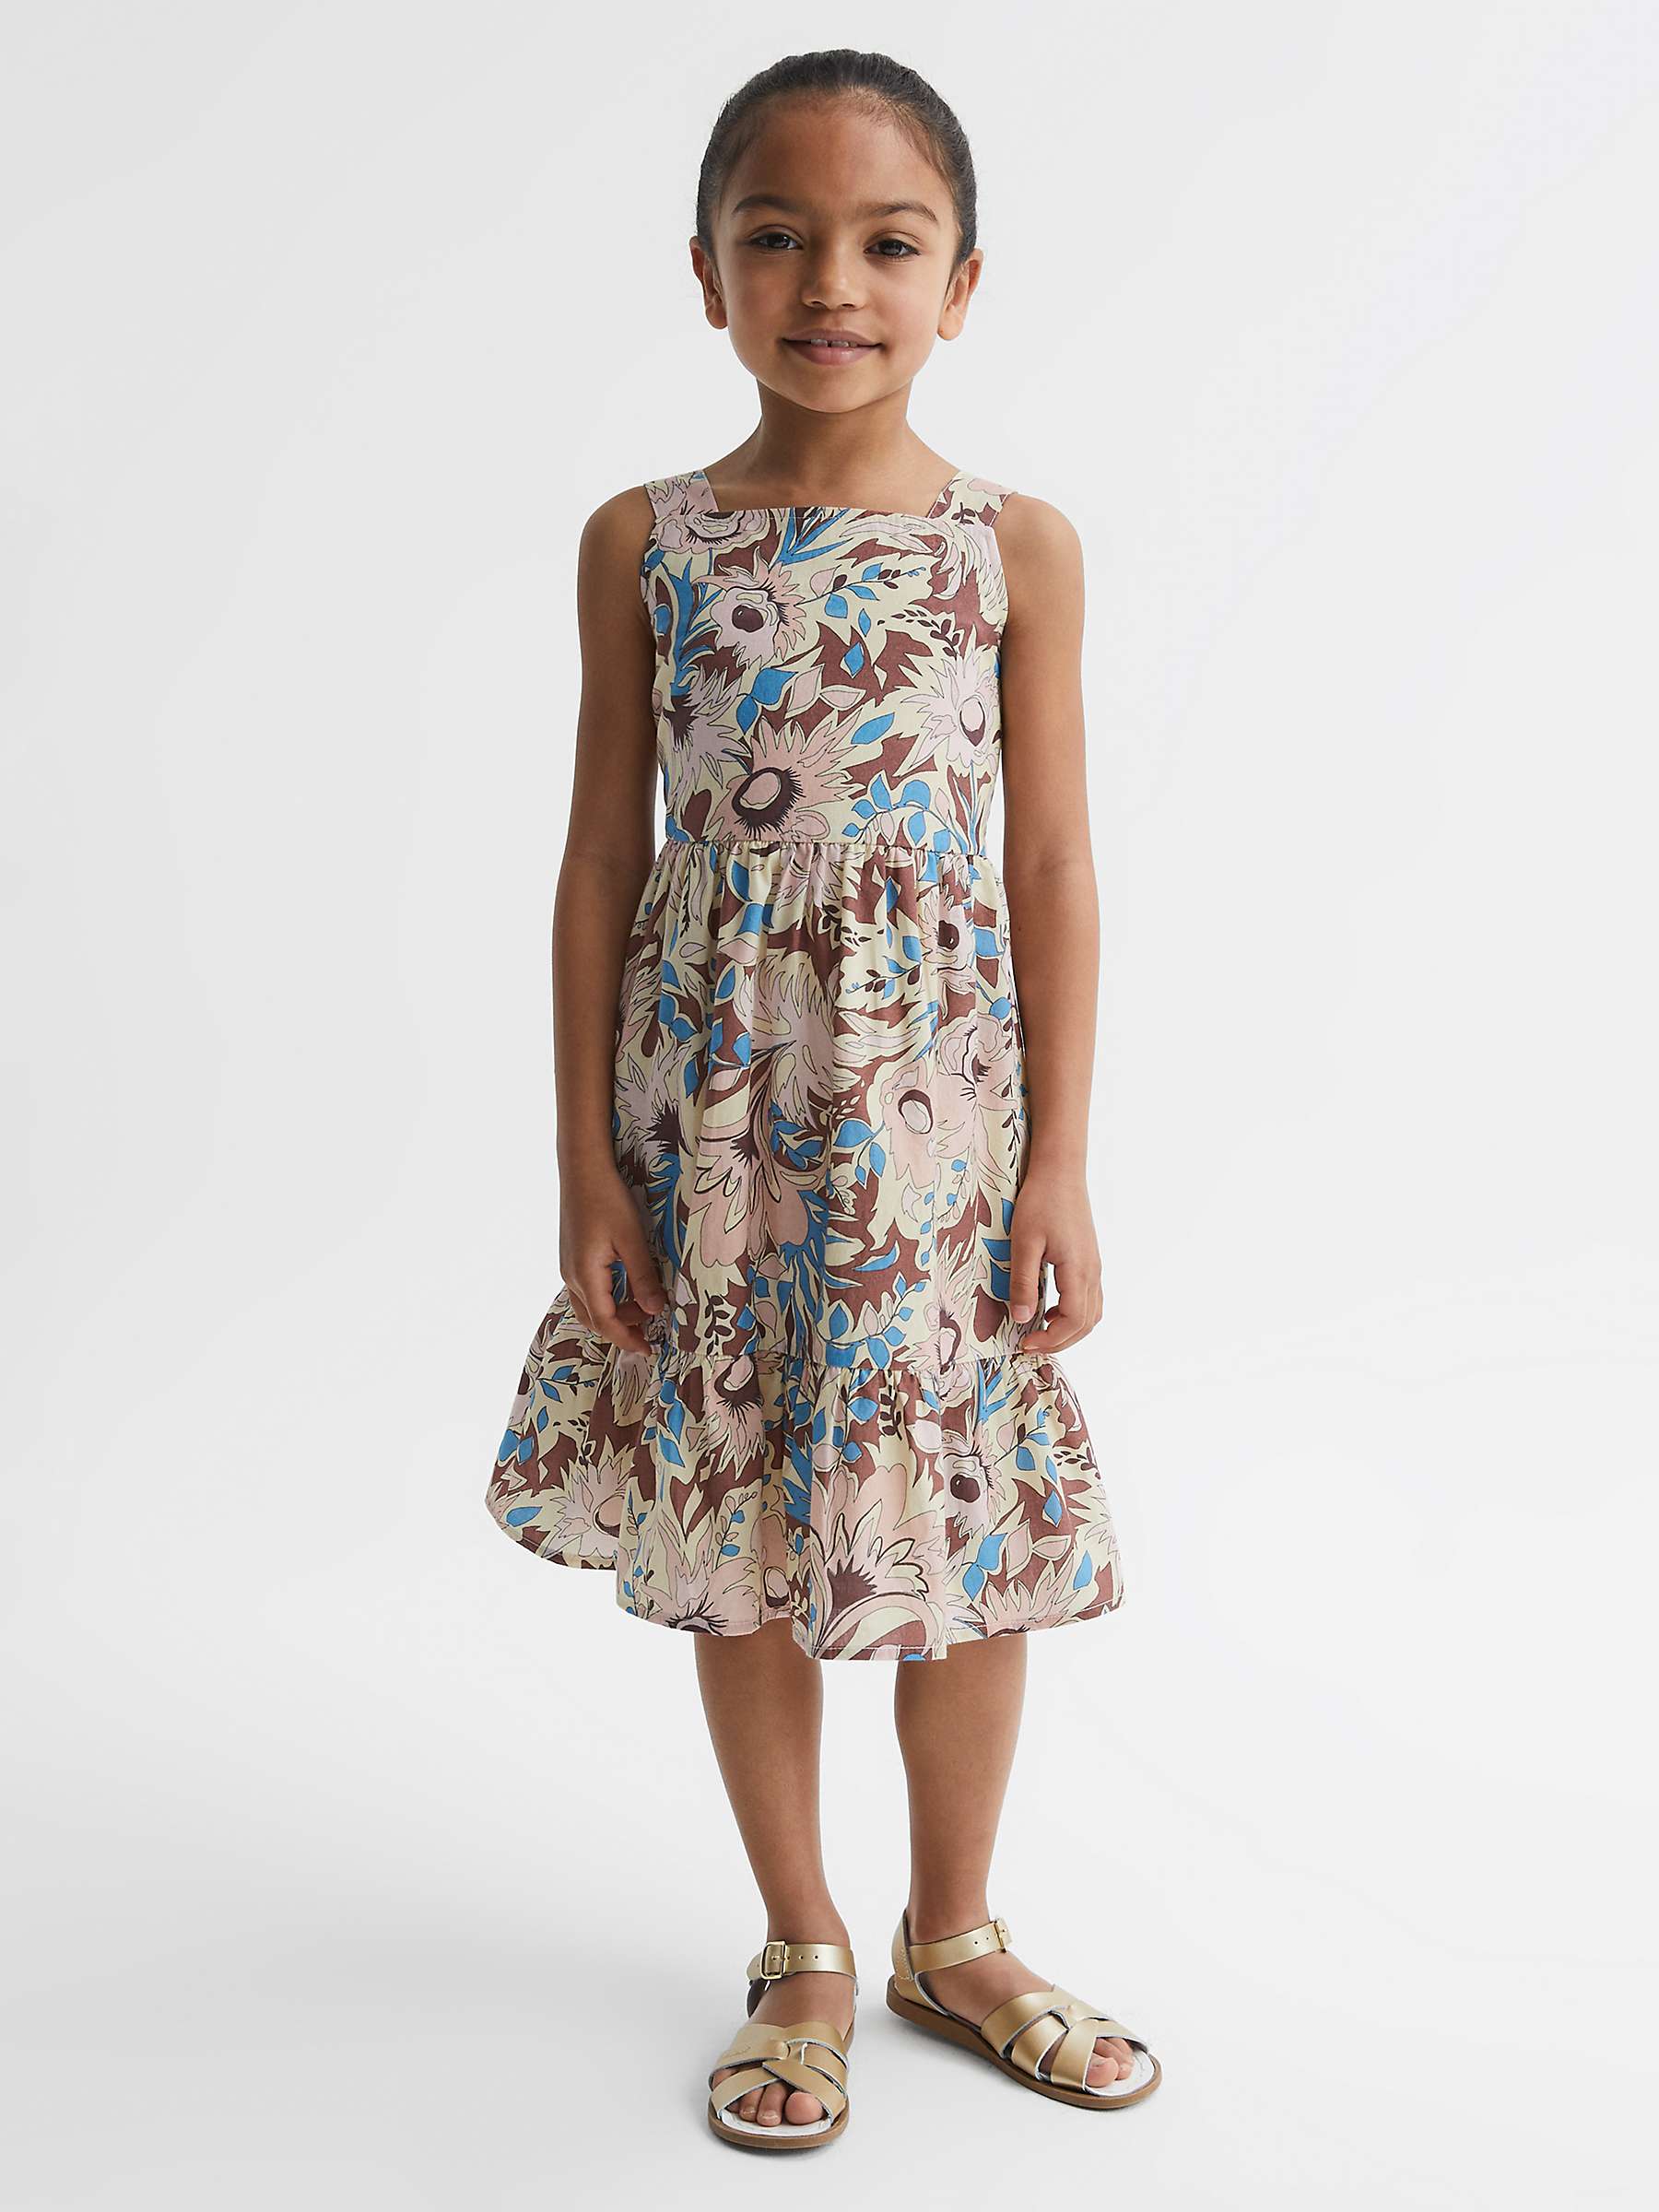 Reiss Kids' Marcie Cotton Dress, Lilac at John Lewis & Partners